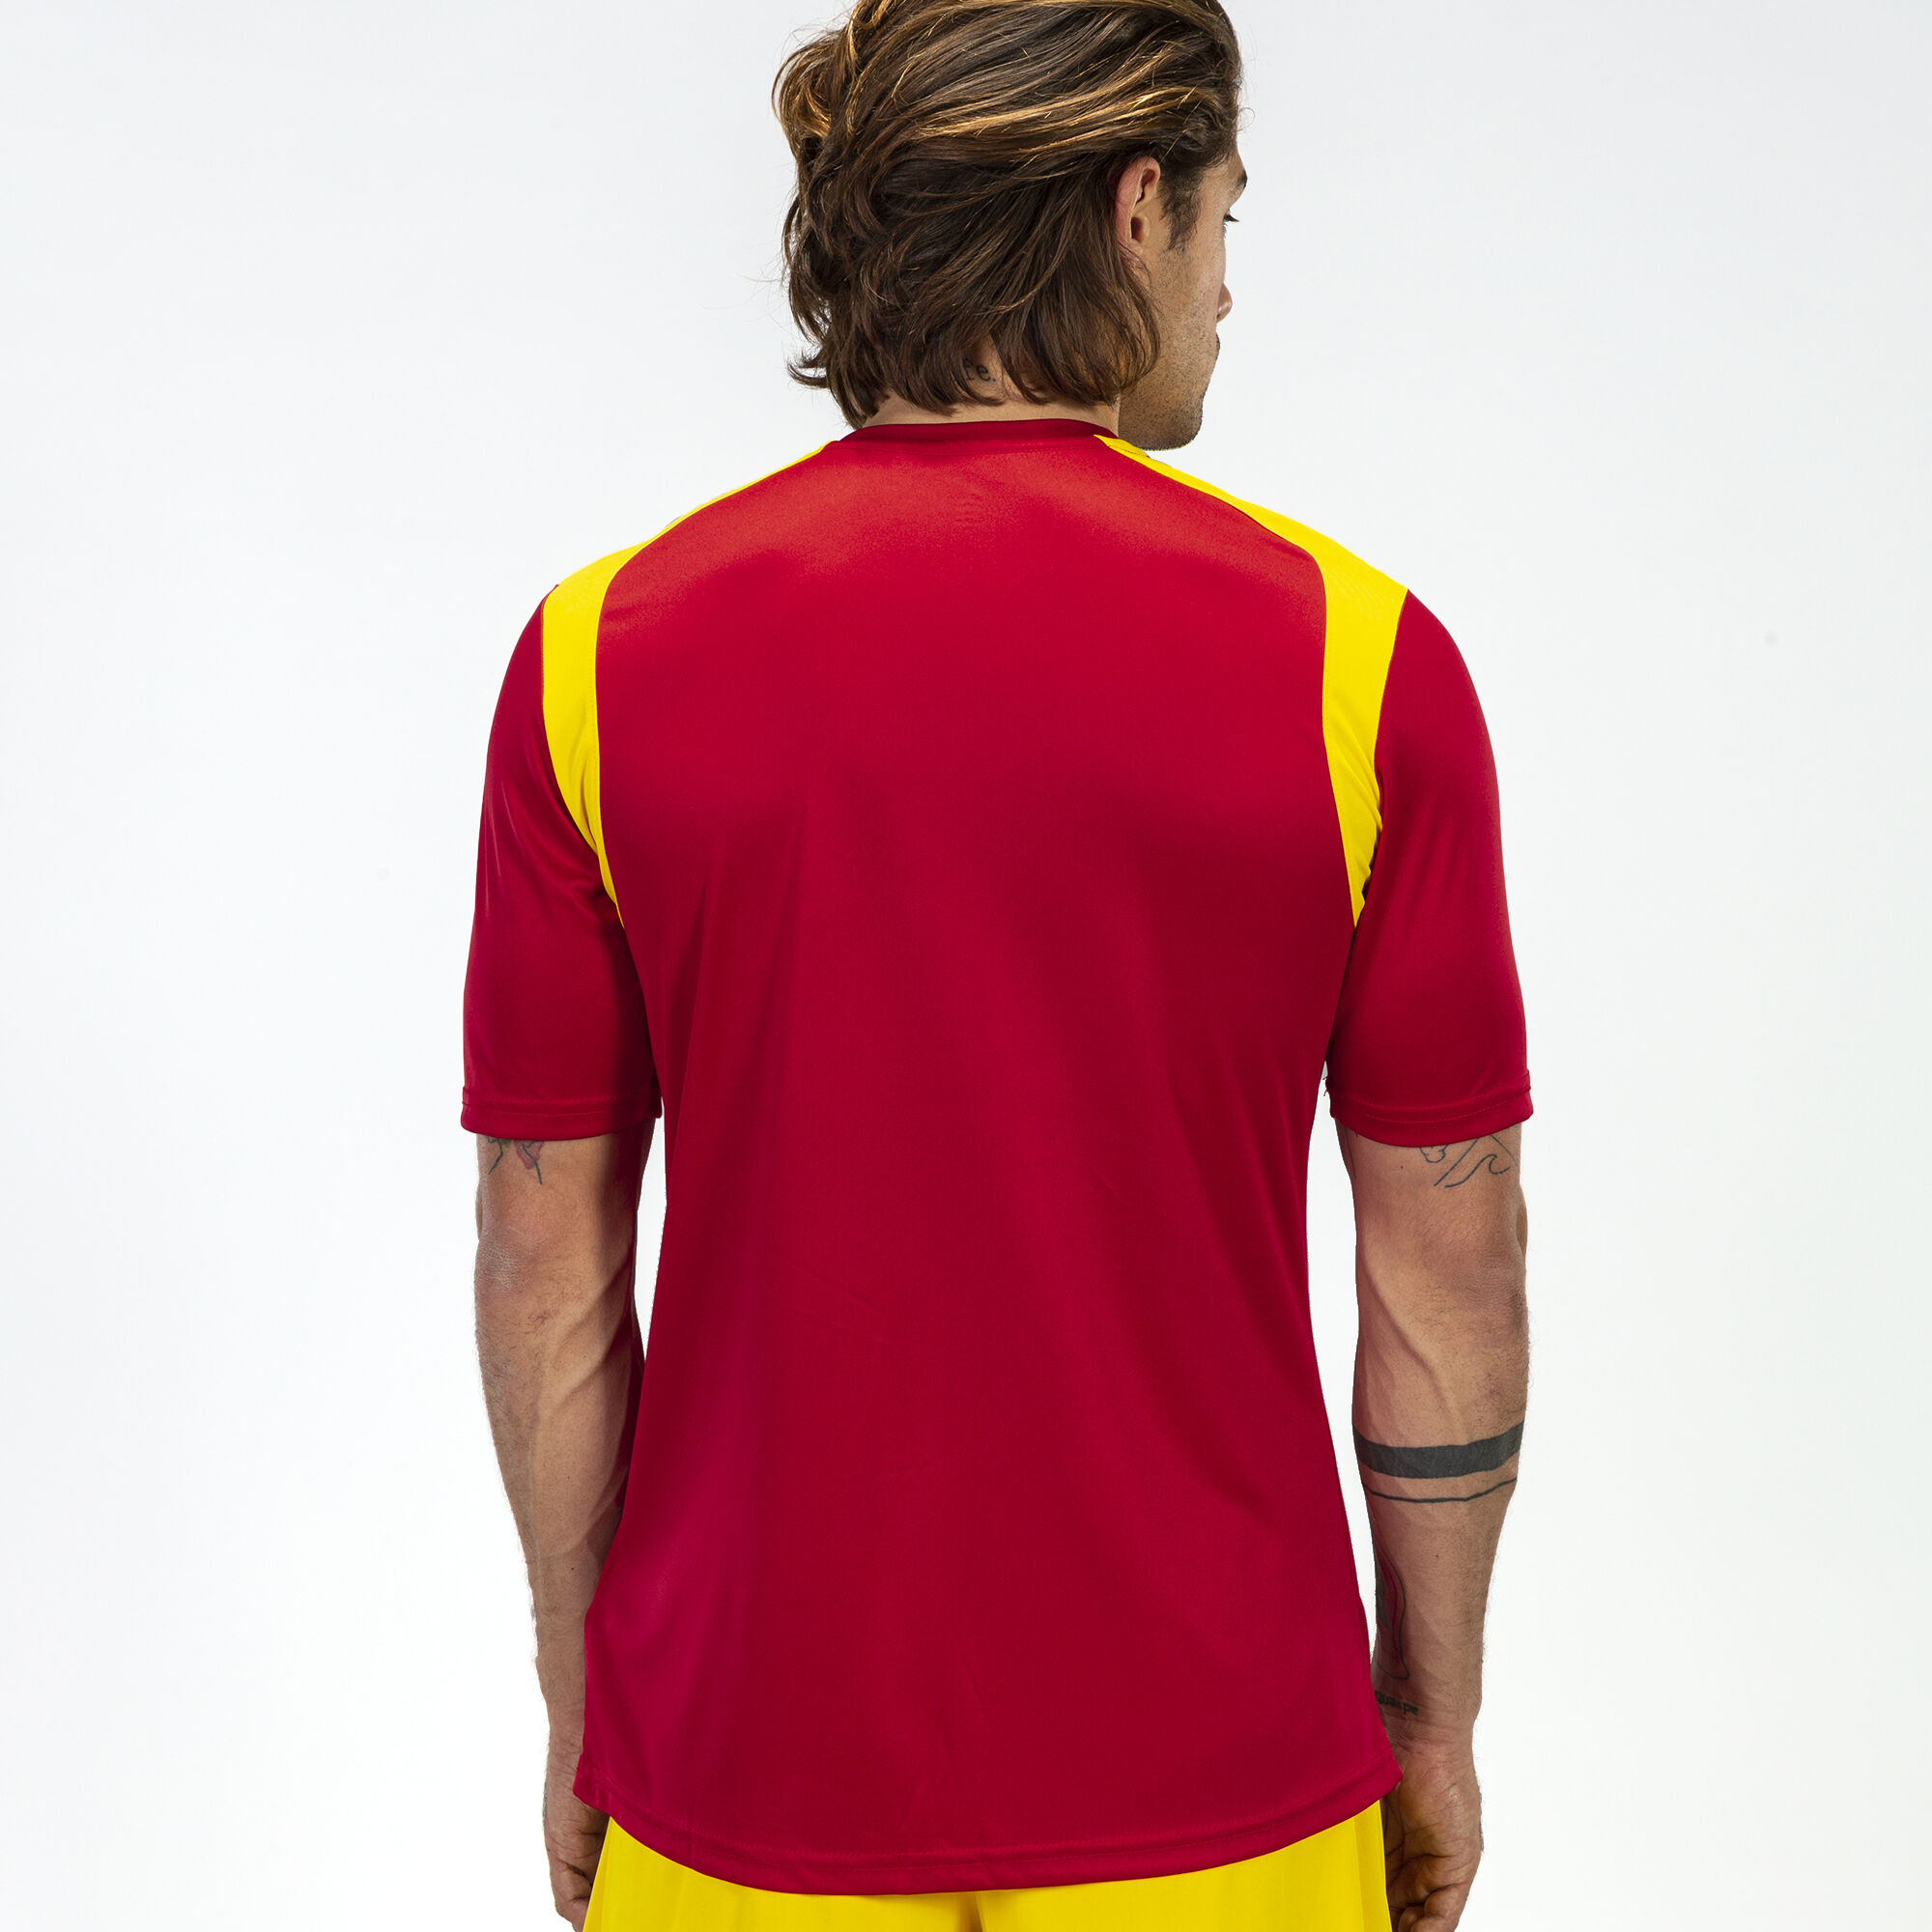 Shirt short sleeve man Championship V red yellow